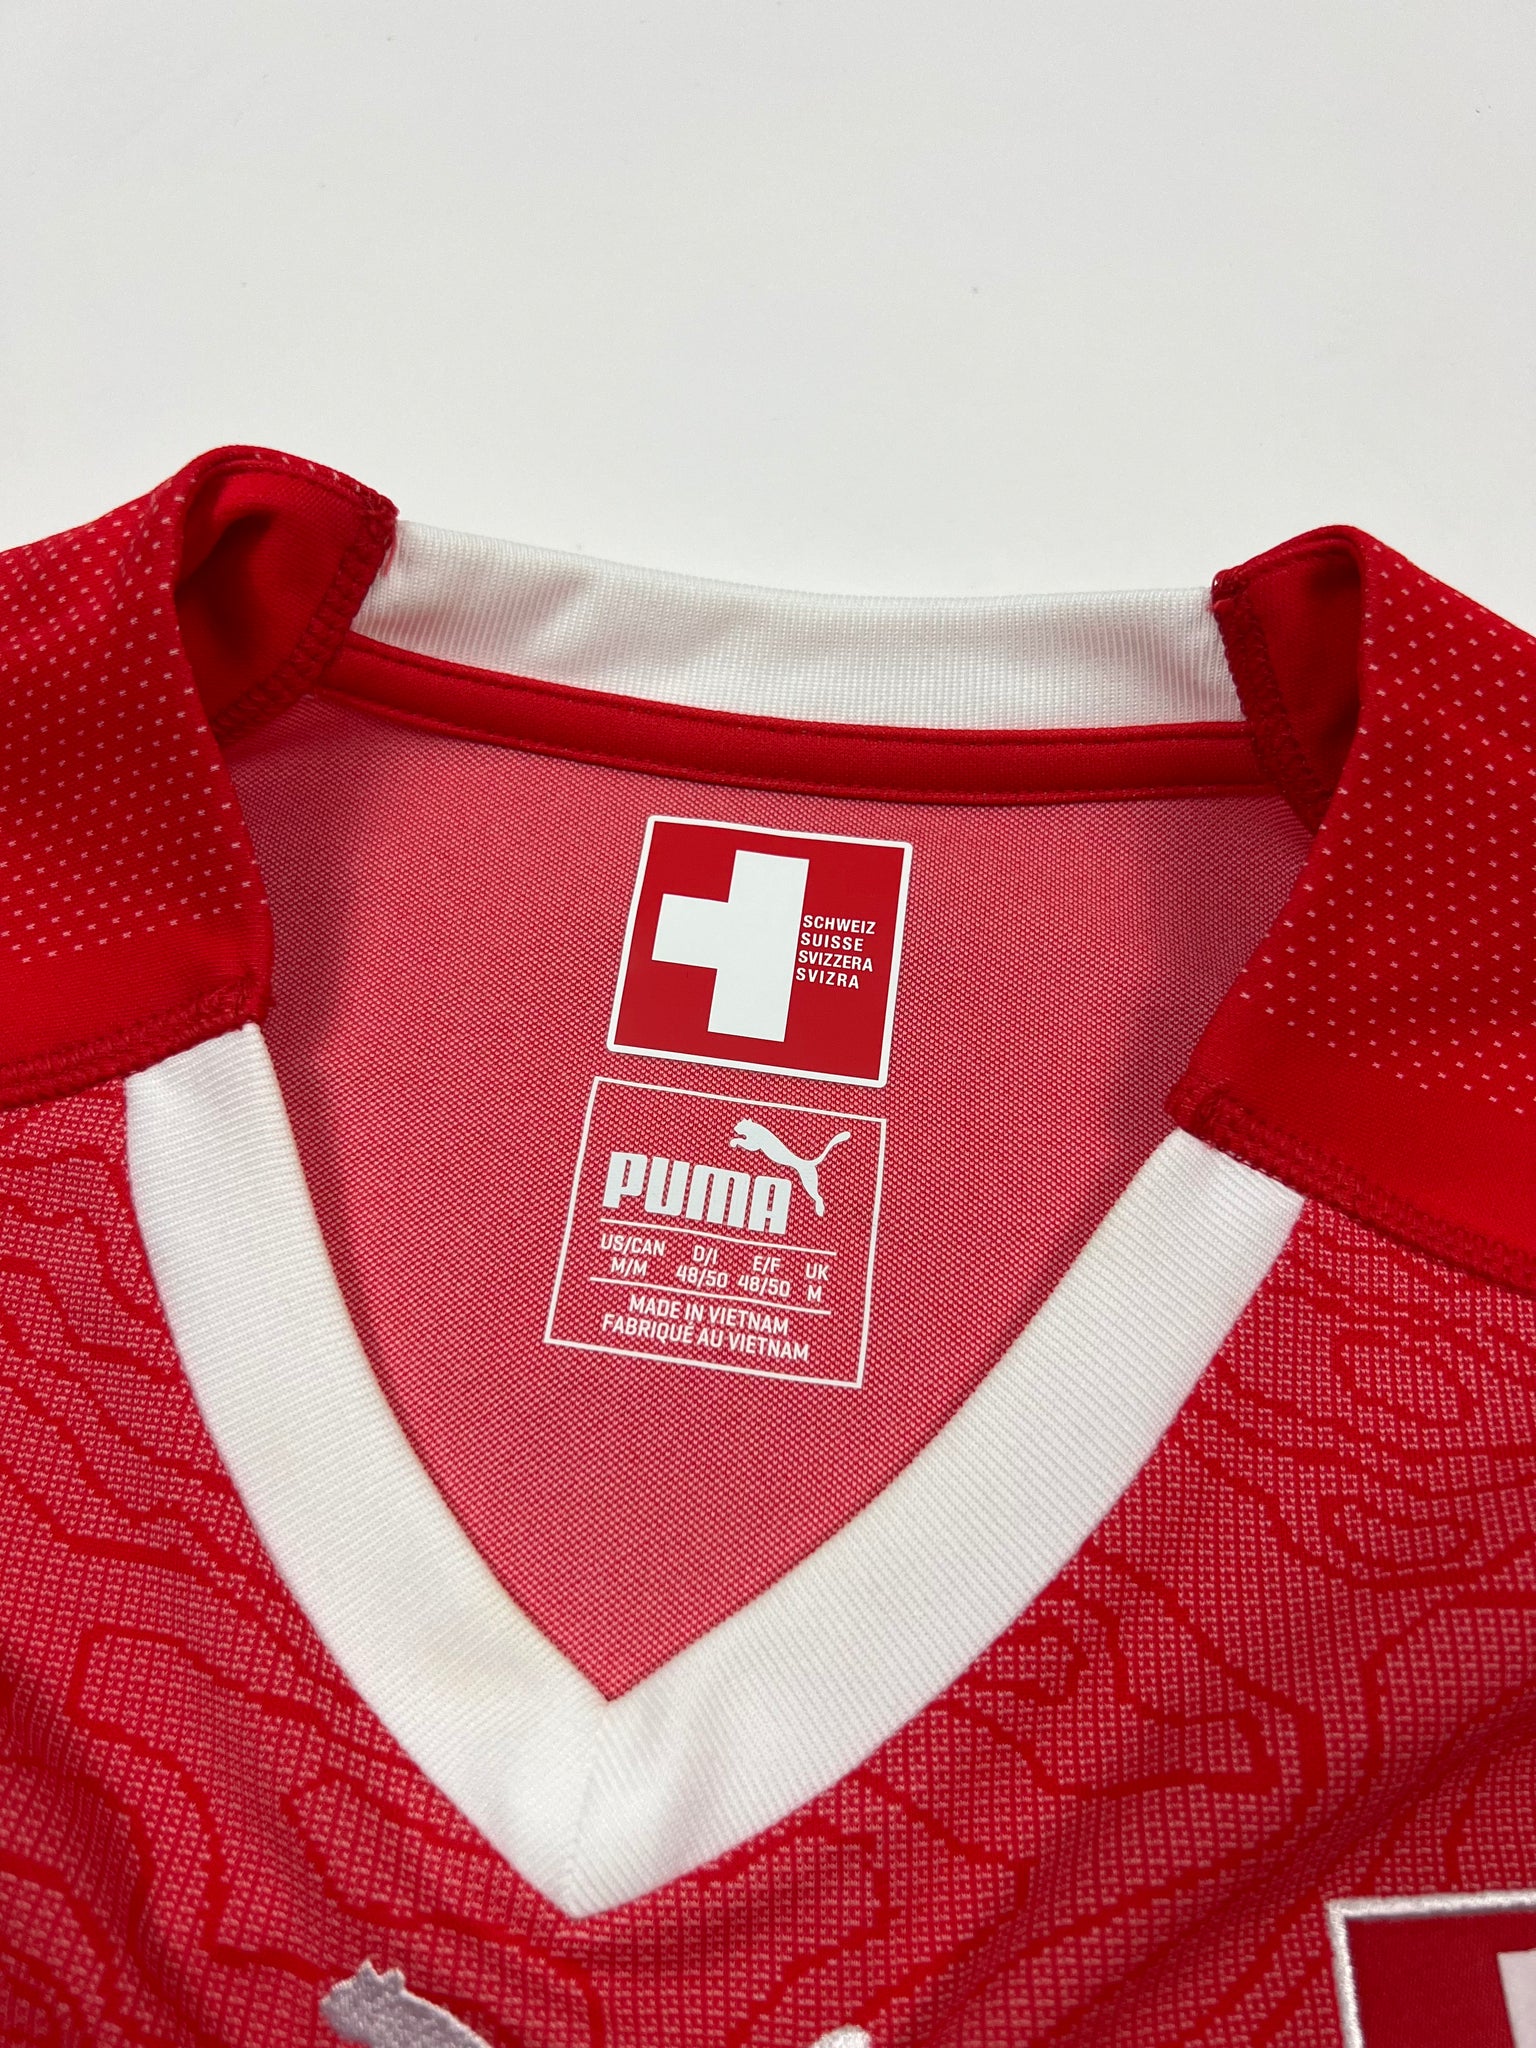 Puma Switzerland Jersey (M)